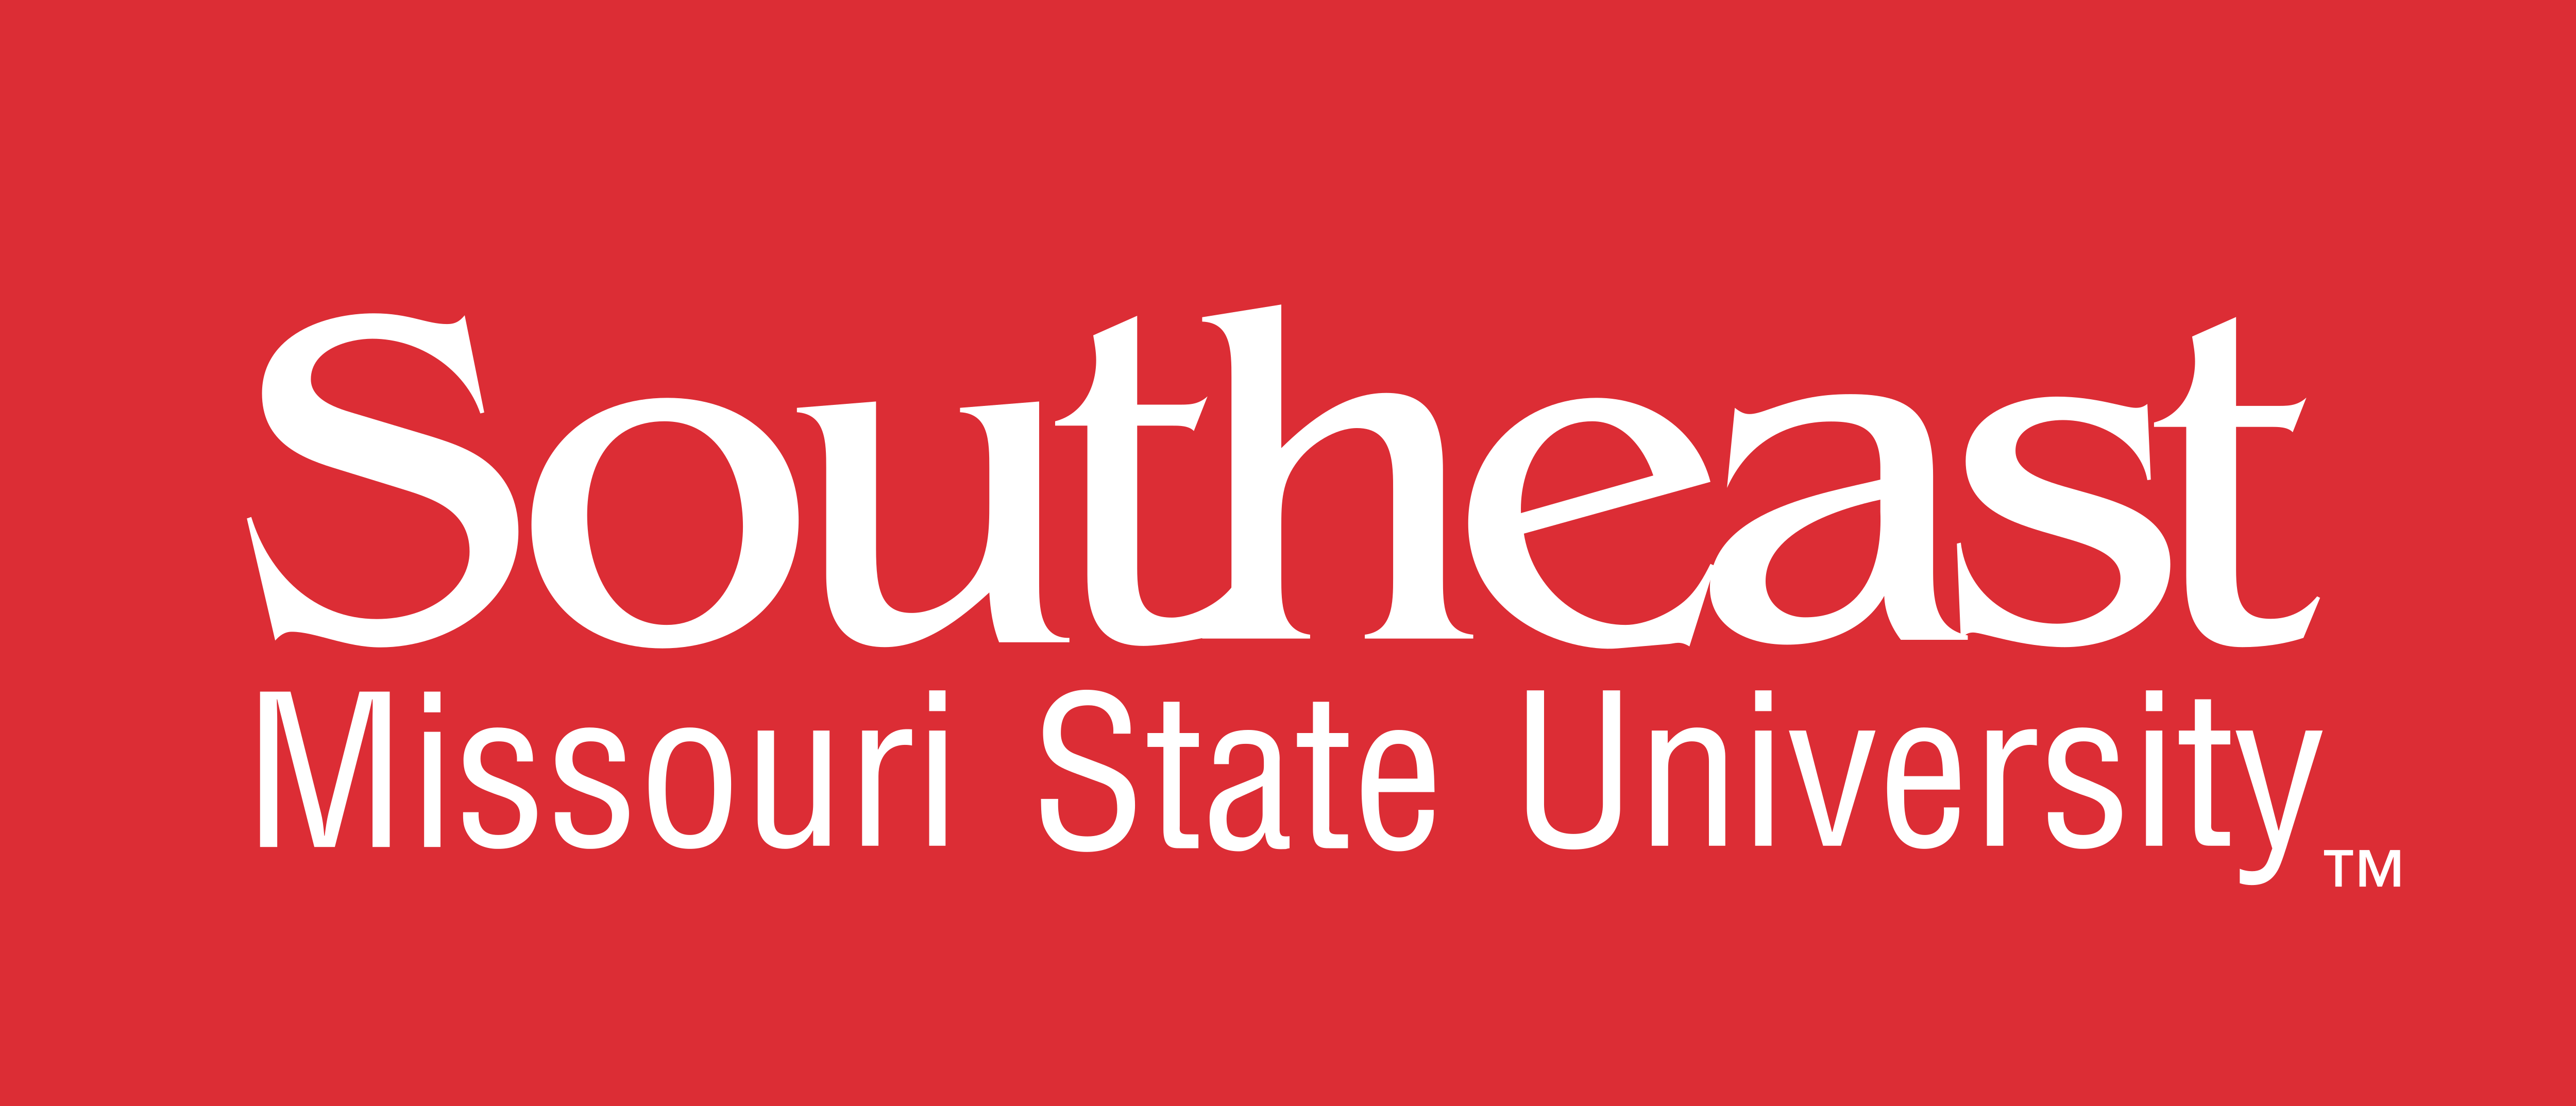 Southeast Missouri State University Logos Download